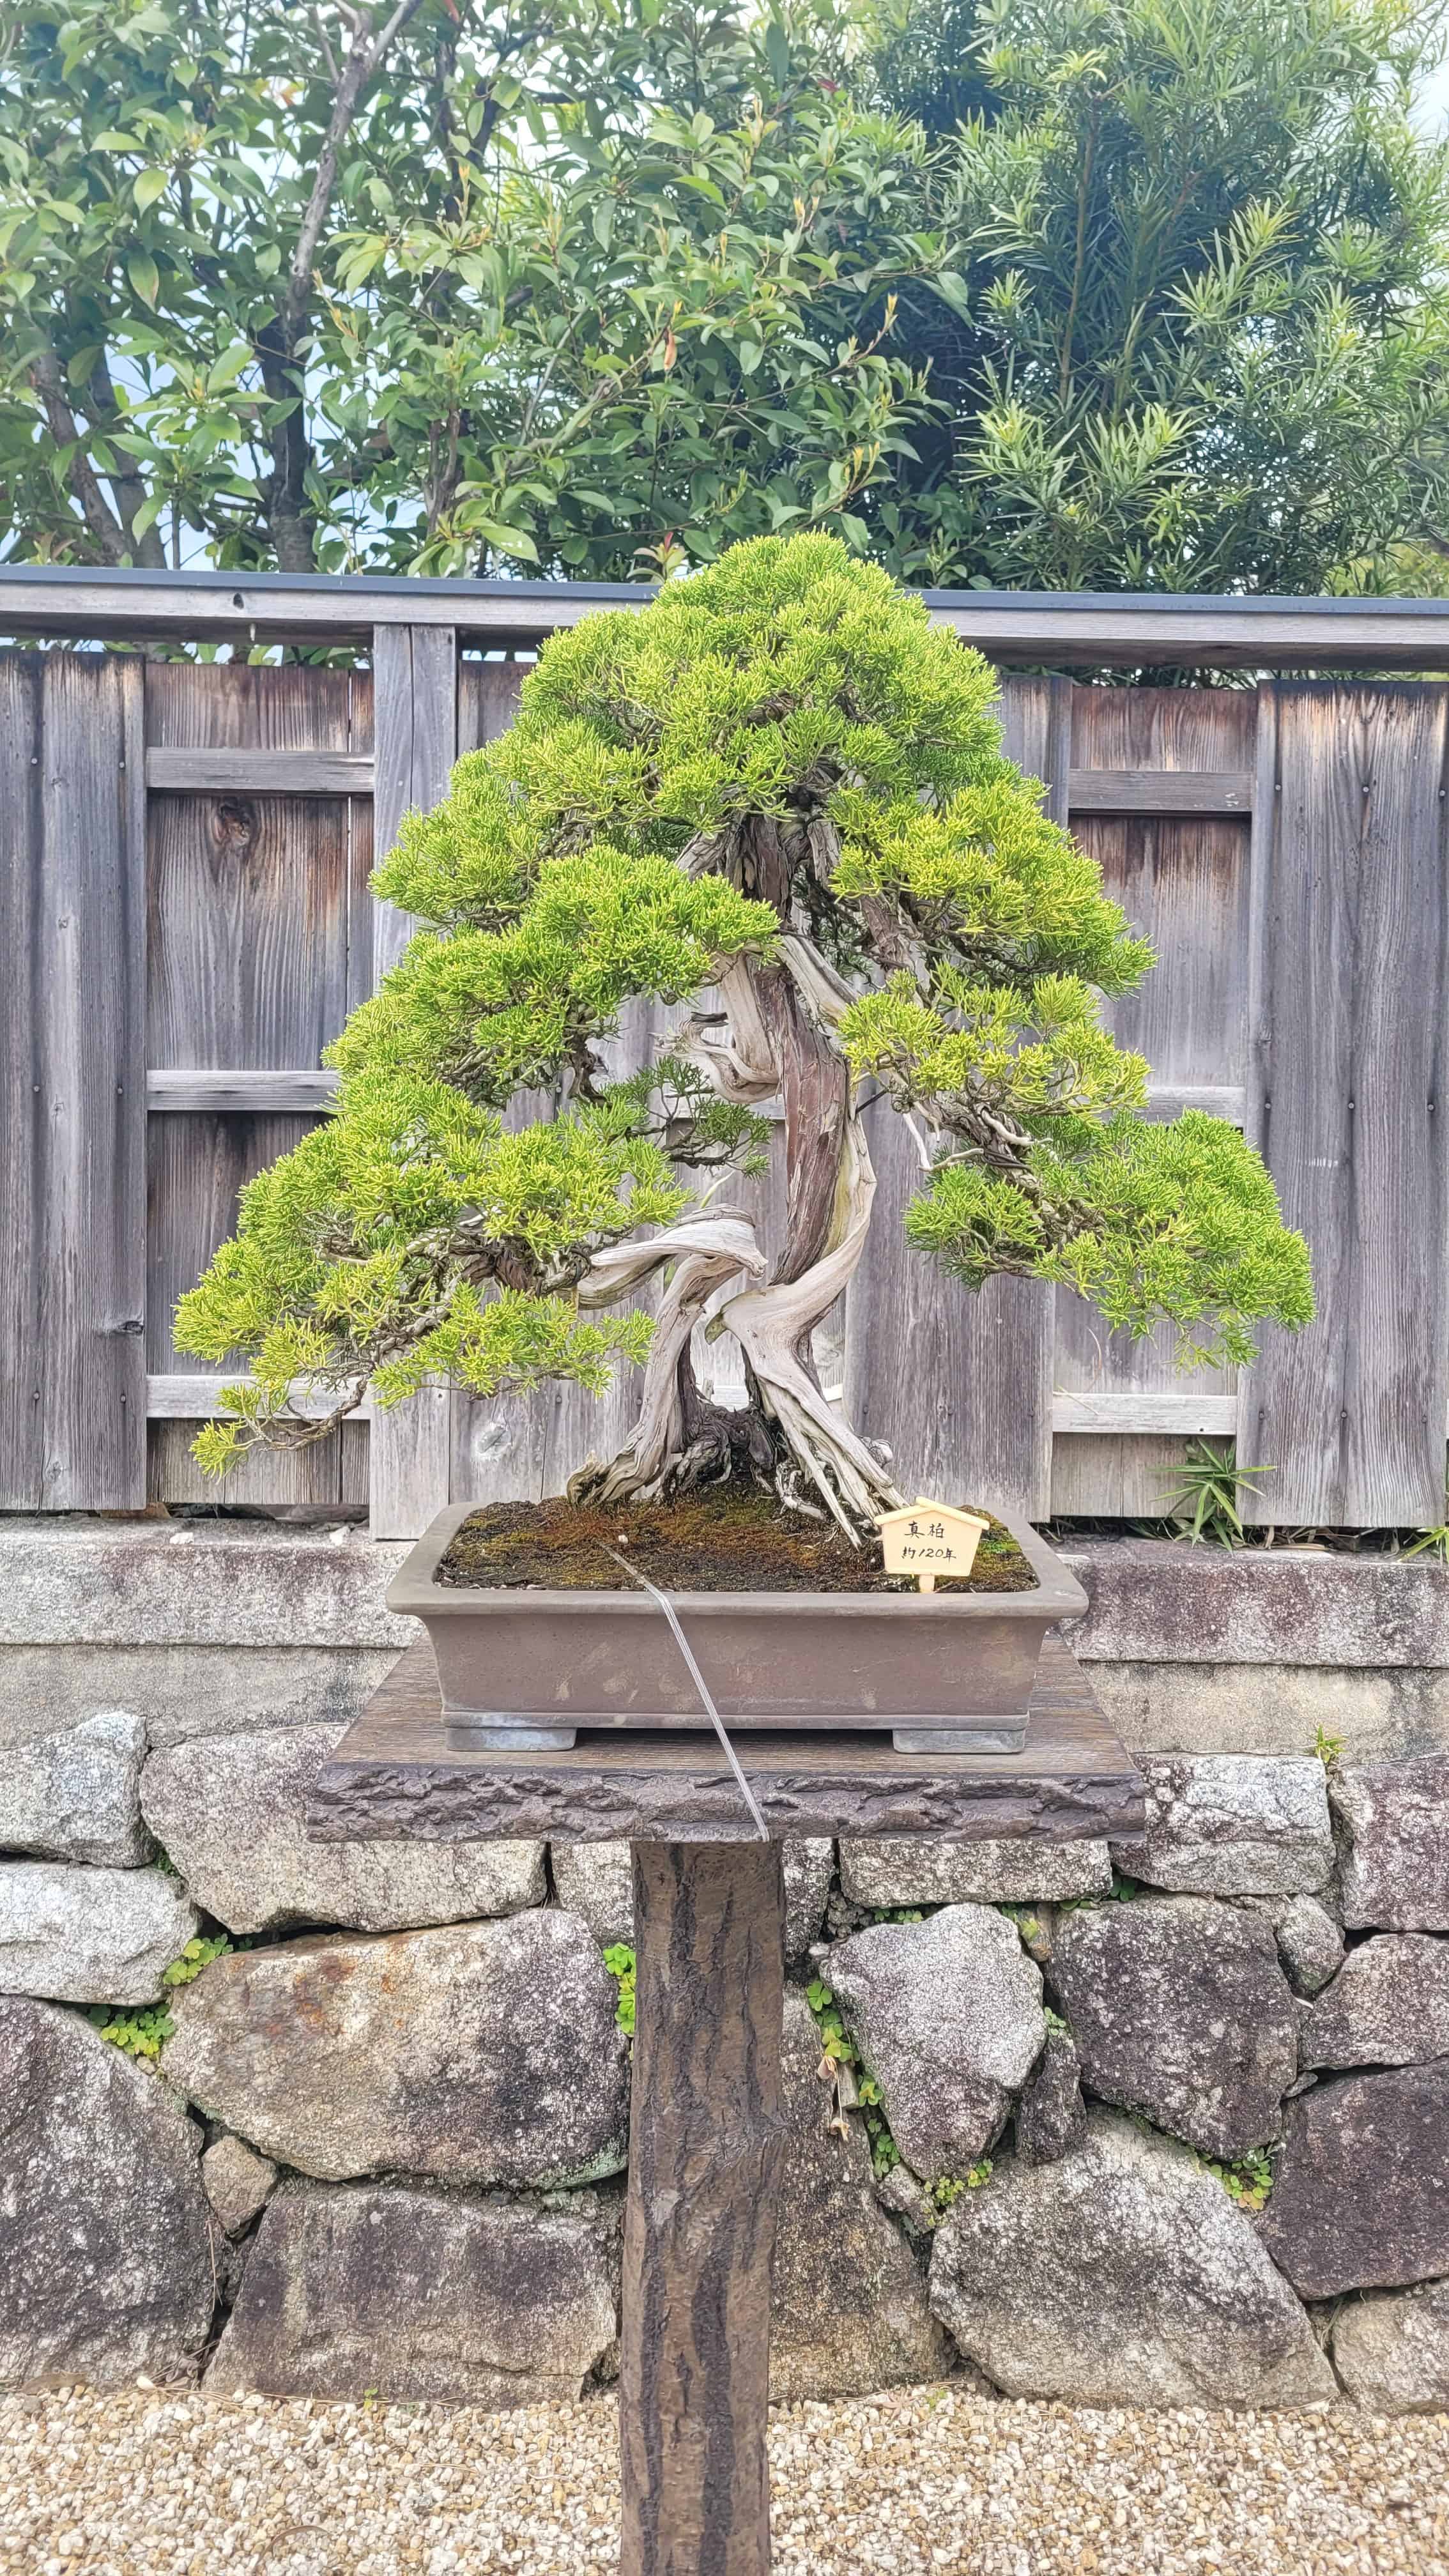 A juniper bonsai tree from omiya museum in Japan